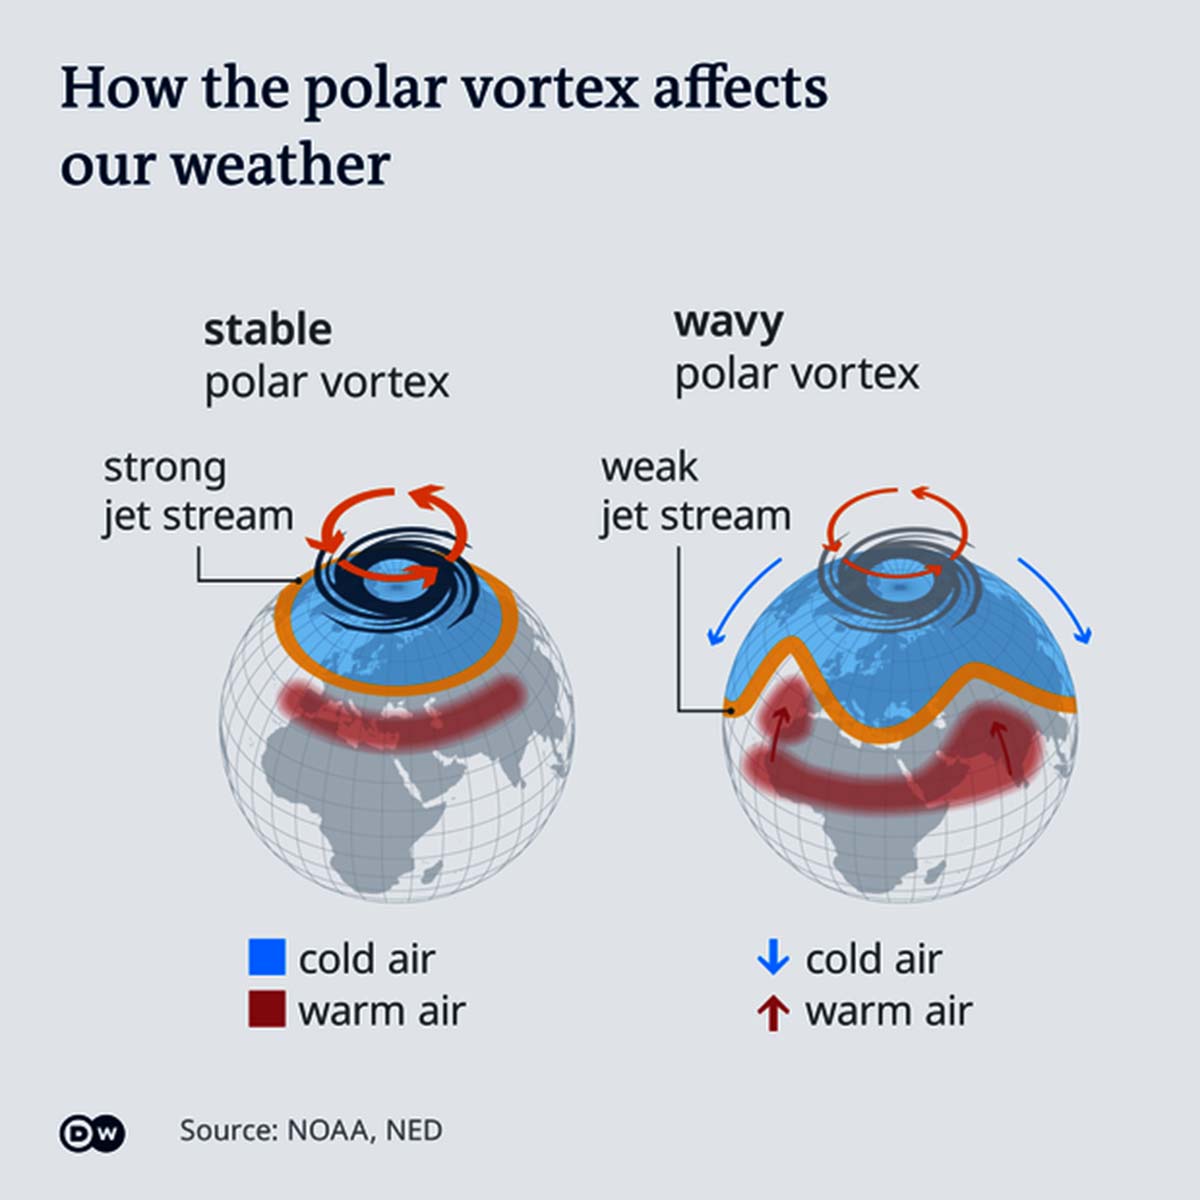 polar-vortex-south-shift-powerful-climatic-event-trigger-ice-age-to-begin-polarvortex